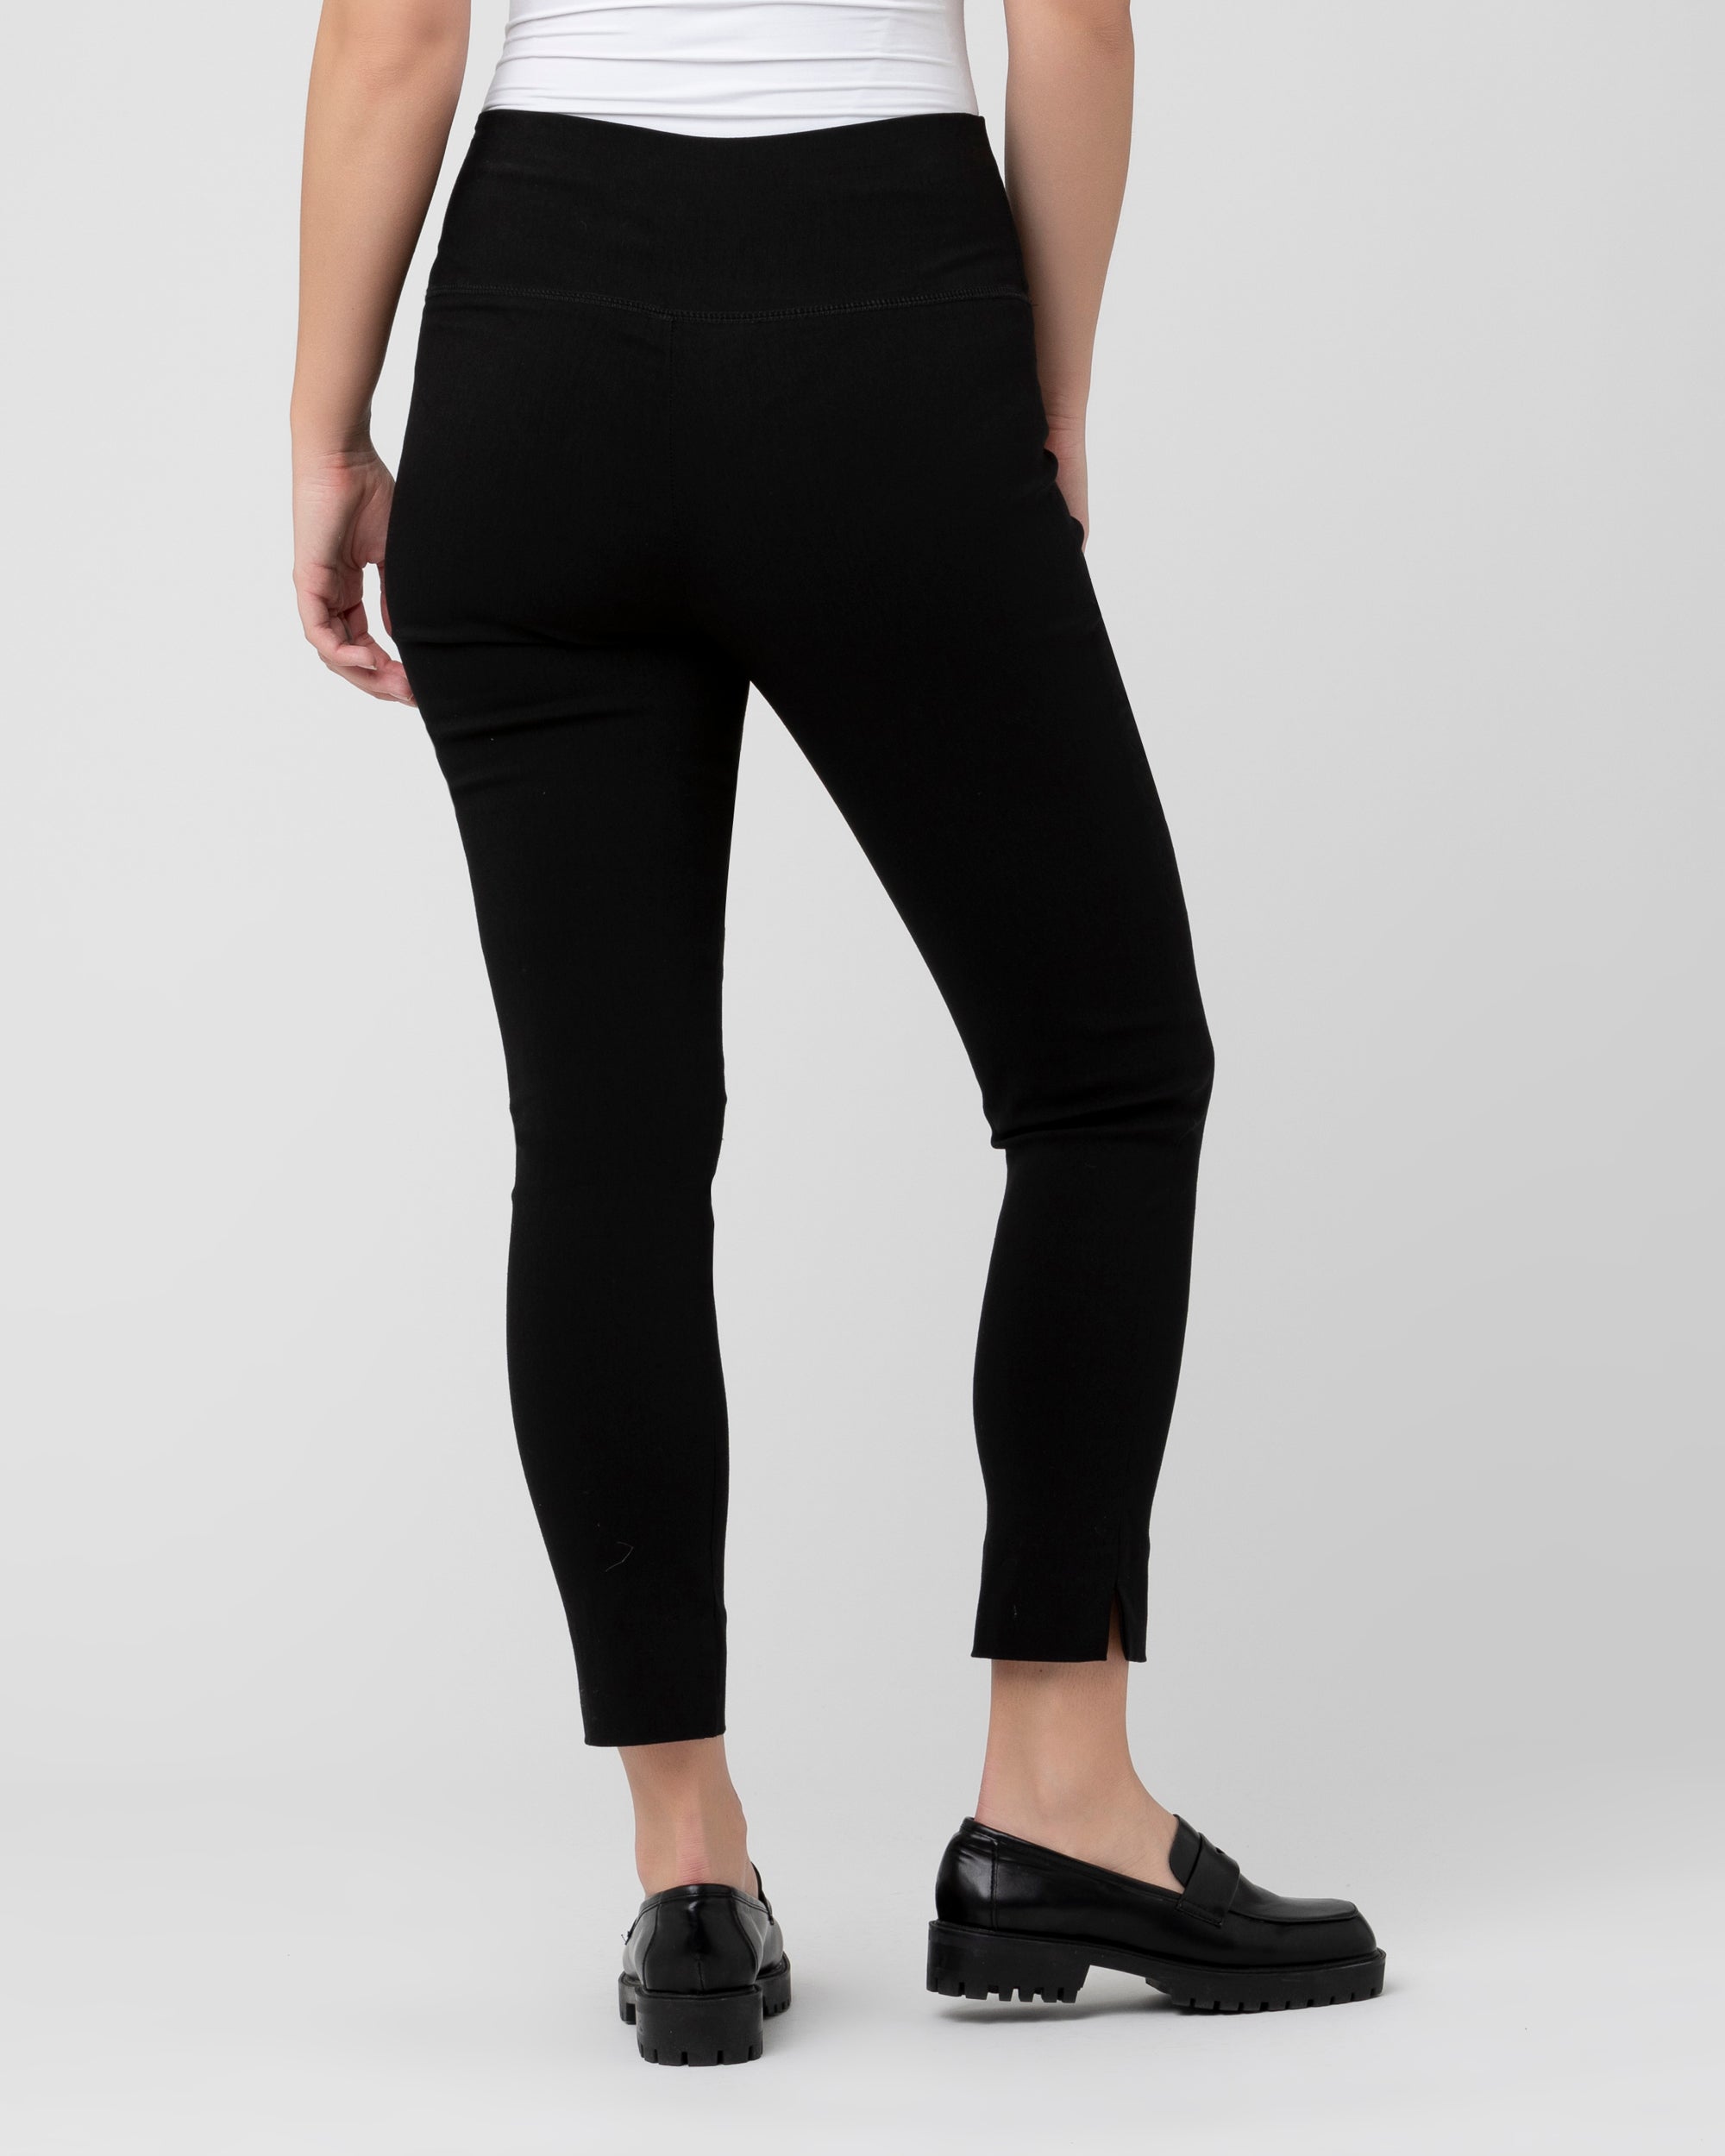 Talbots Womens Size 16 Heritage Capri Pants Black Cotton Stretch Side Zip -  $27 - From Dan